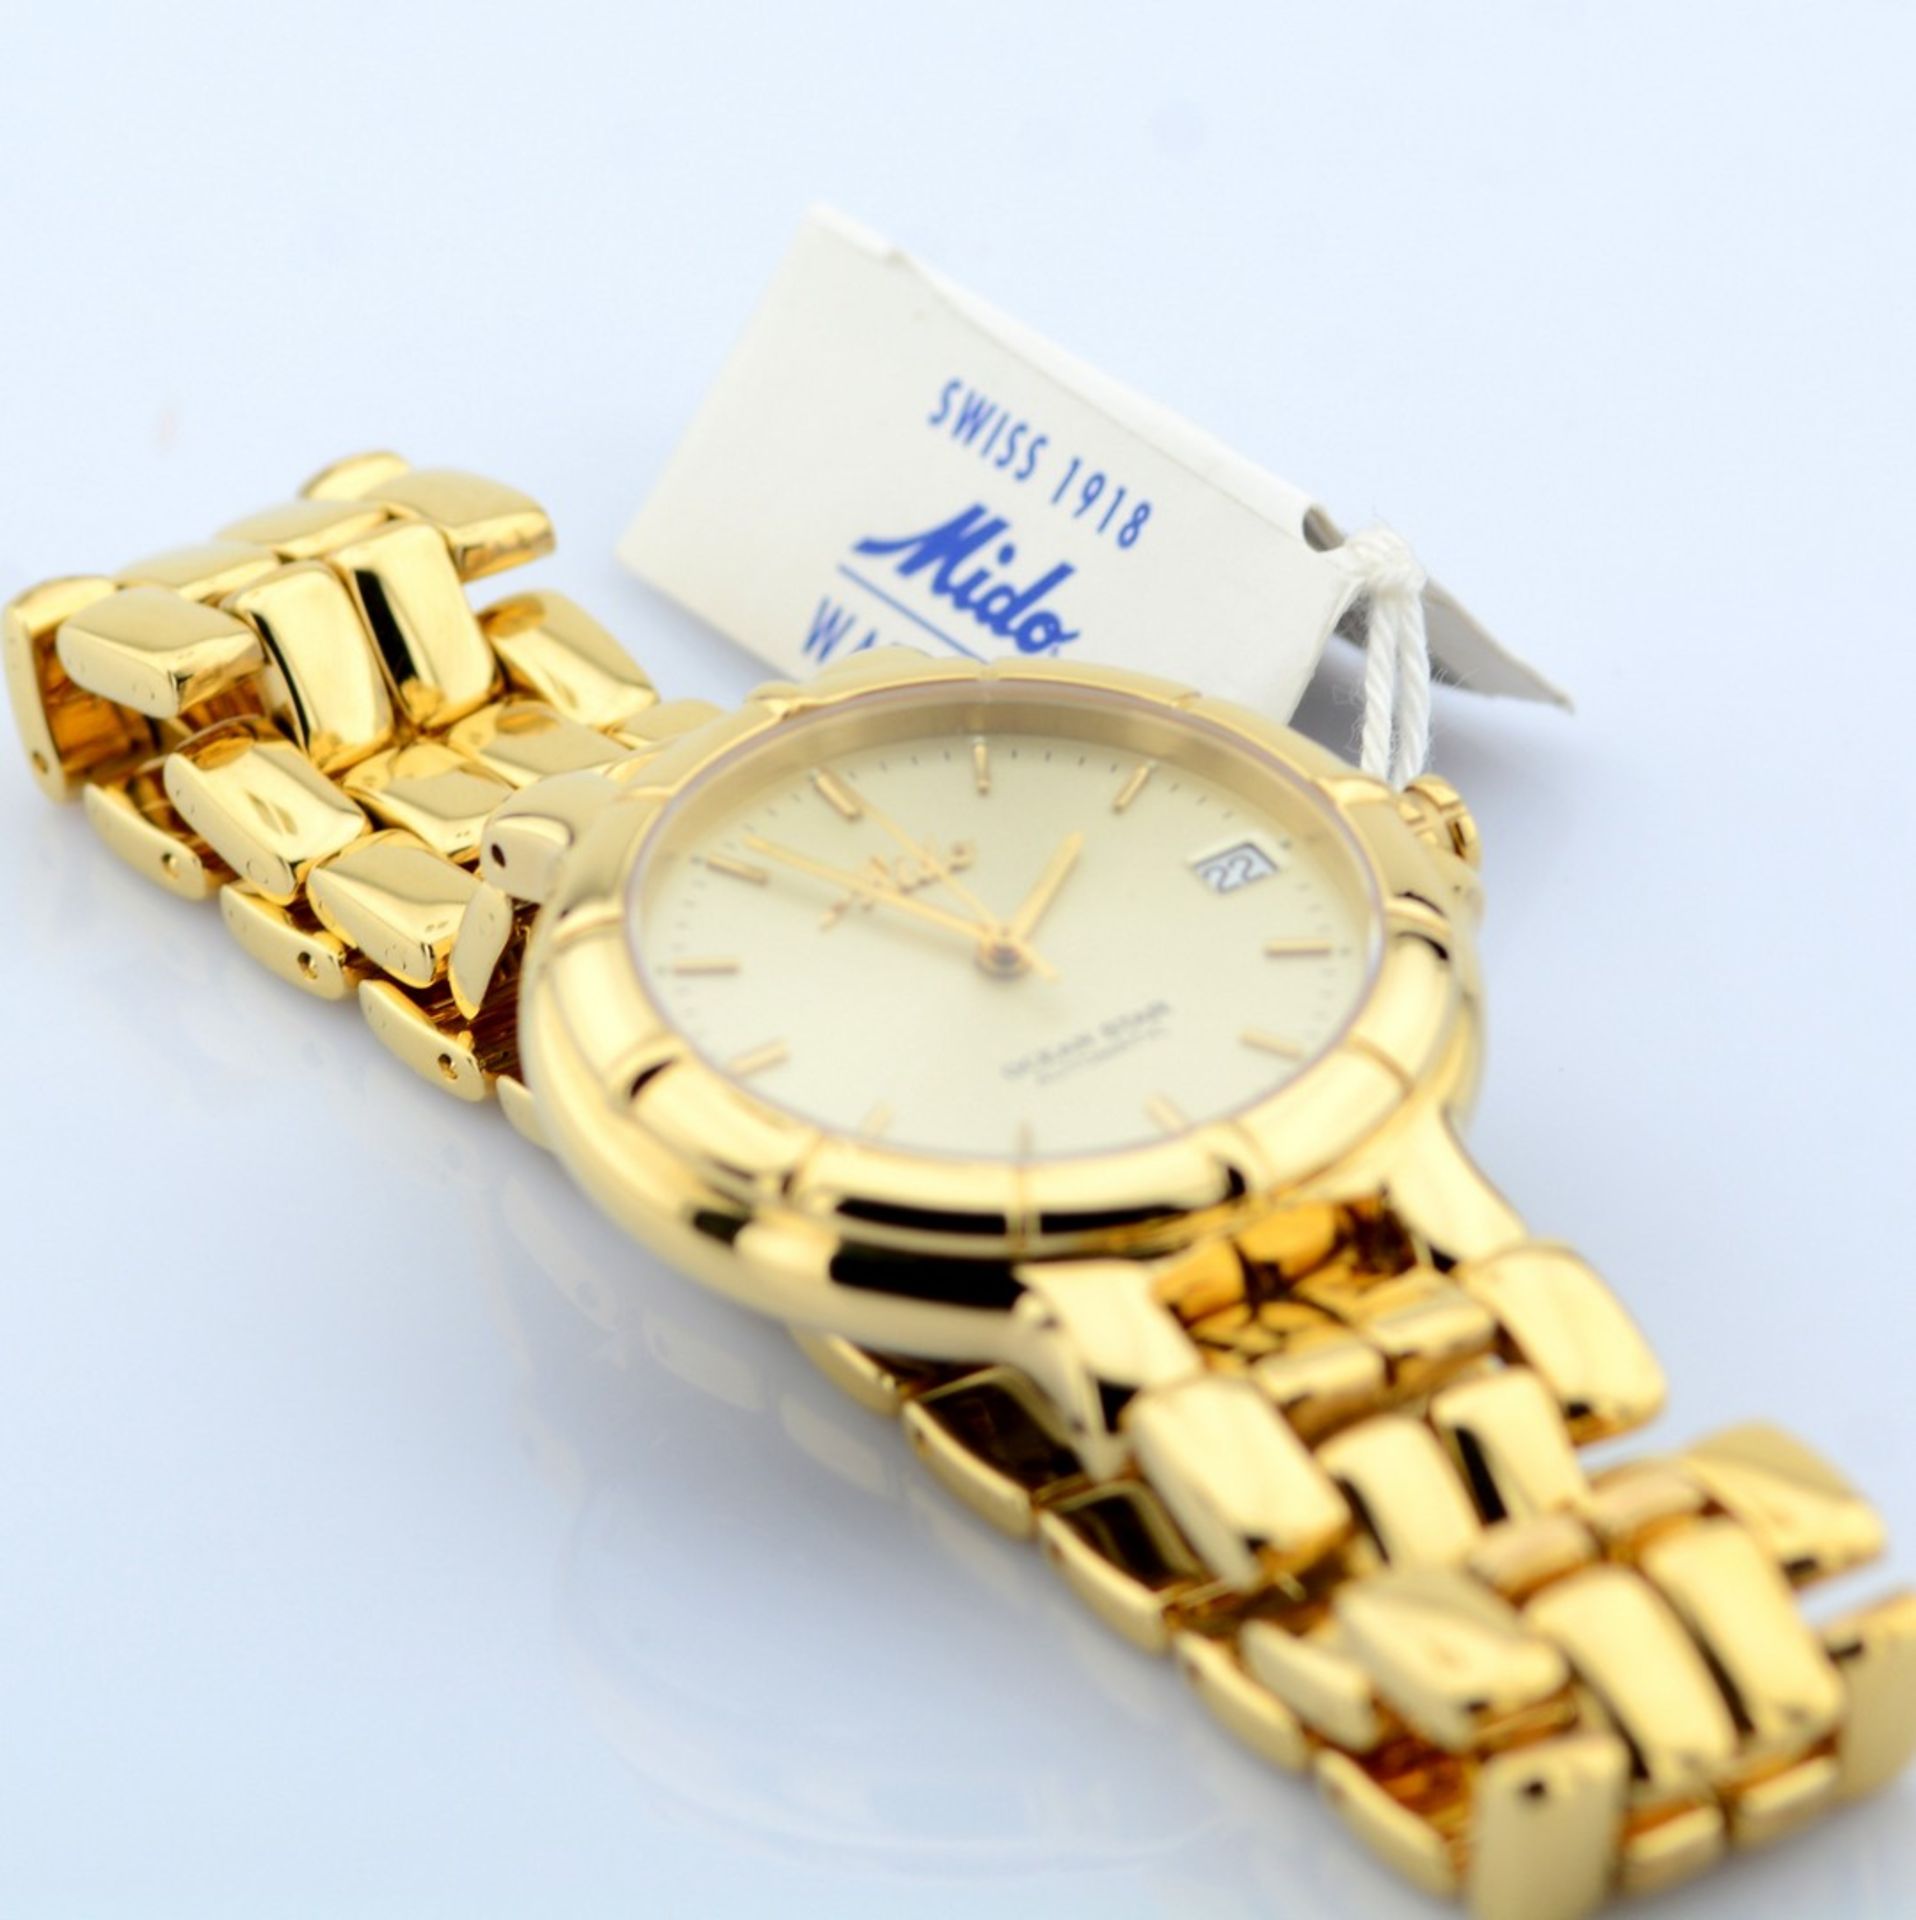 Mido / Ocean Star Automatic Date - Gentlmen's Gold-plated Wrist Watch - Image 7 of 8